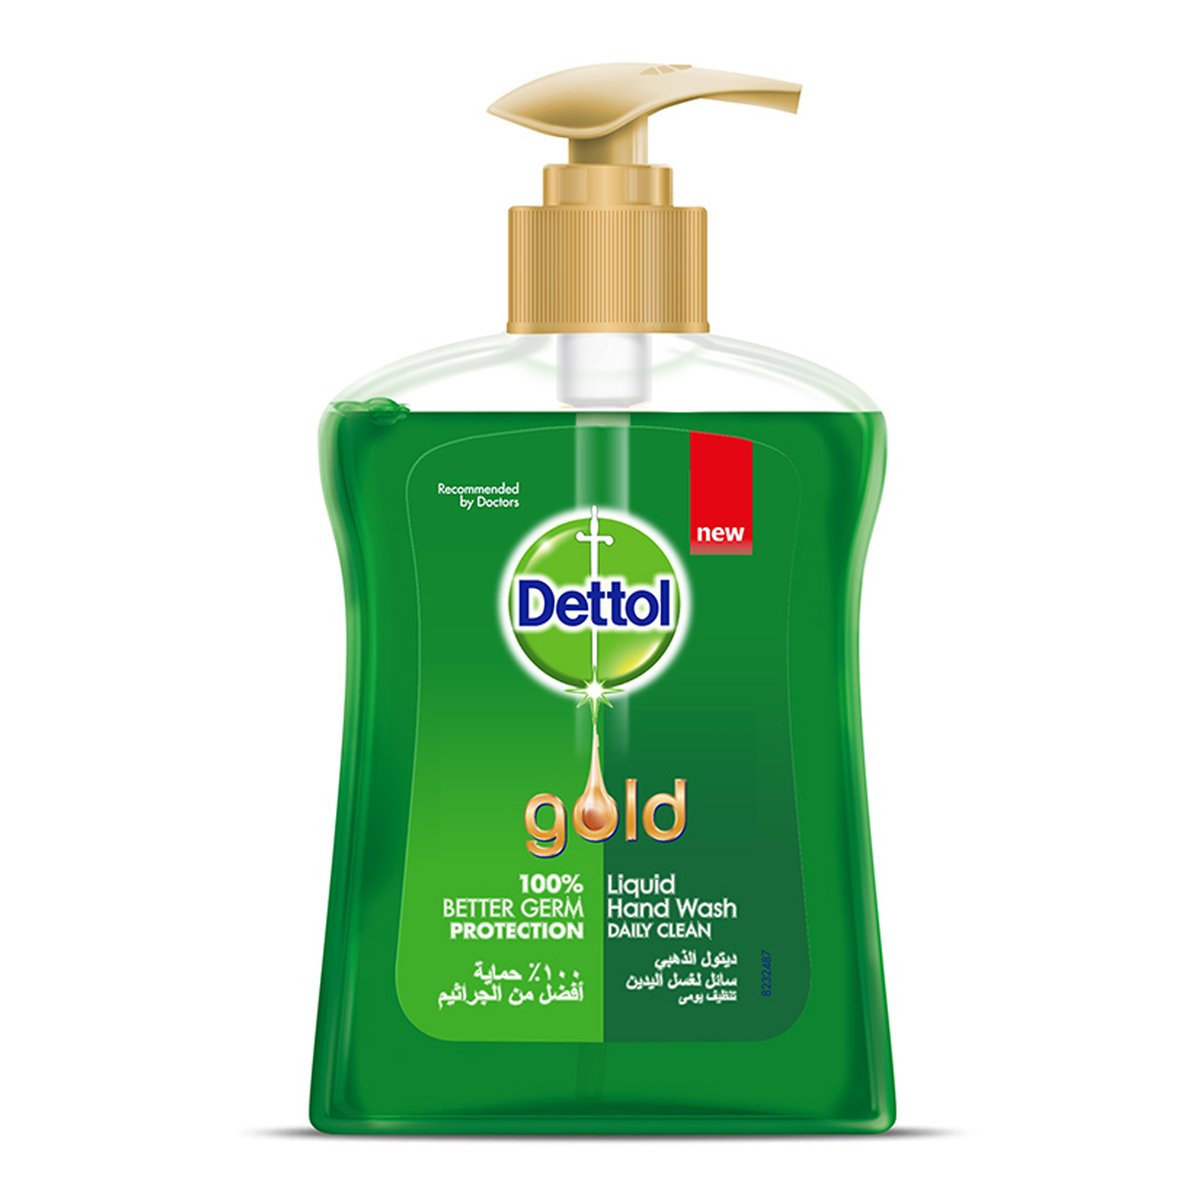 Dettol Gold Anti-Bacterial Liquid Handwash Daily Clean 200 ml